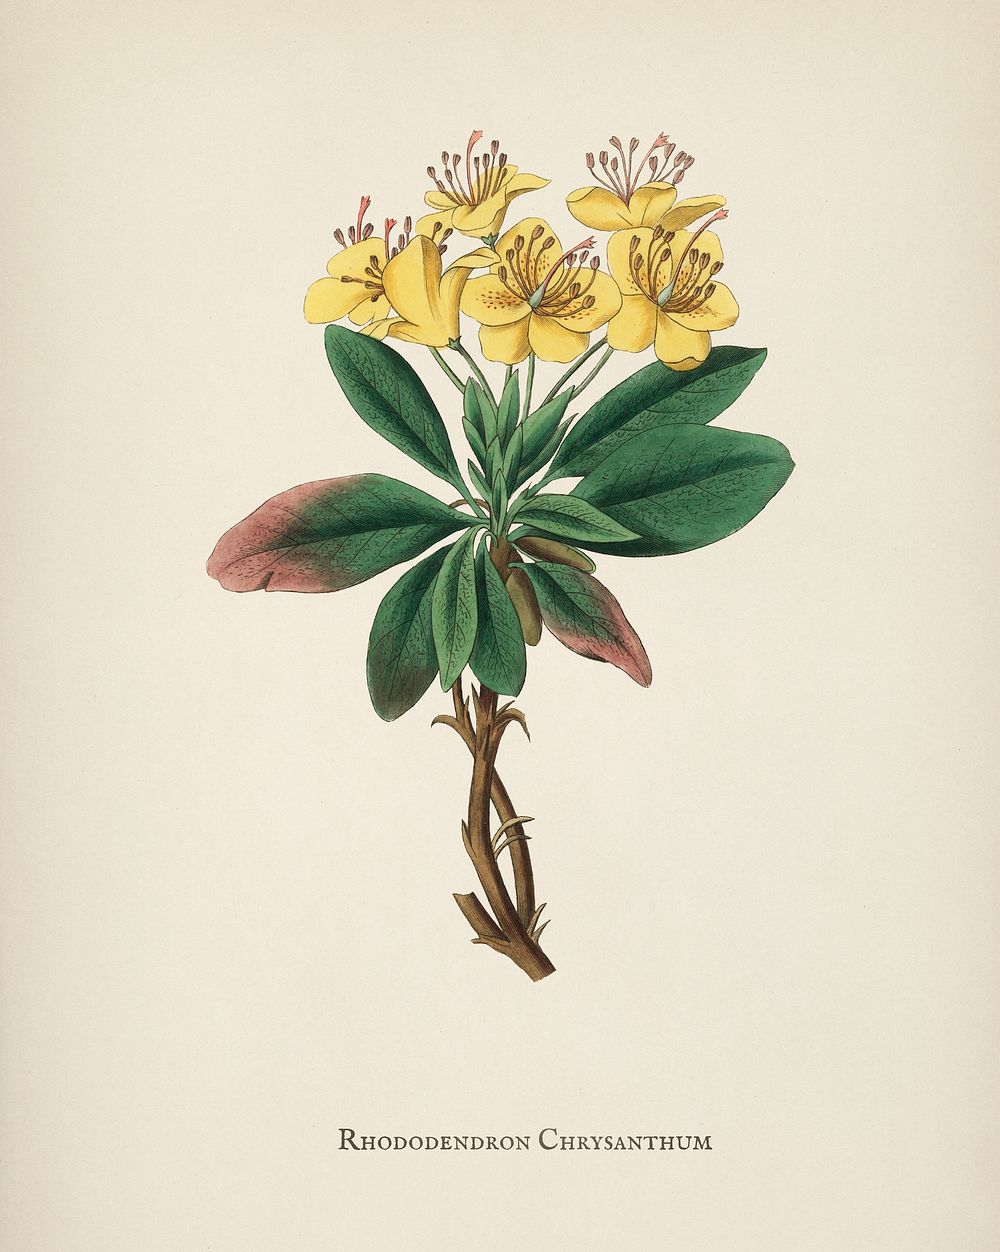 Gum benjamin tree (Rhododendron chrysanthum) illustration from Medical Botany (1836) by John Stephenson and James Morss…